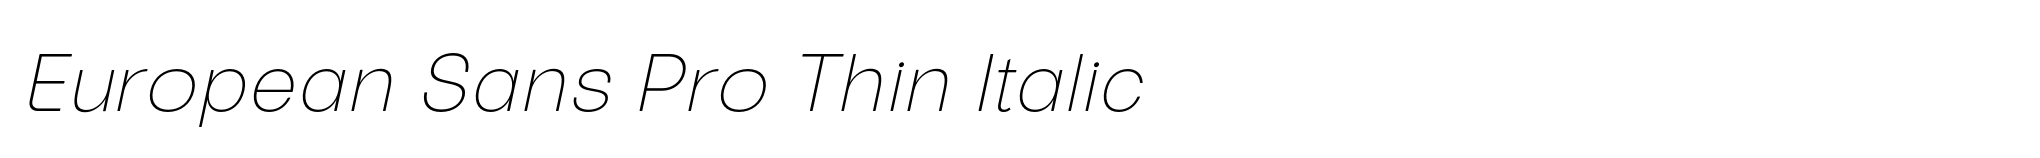 European Sans Pro Thin Italic image